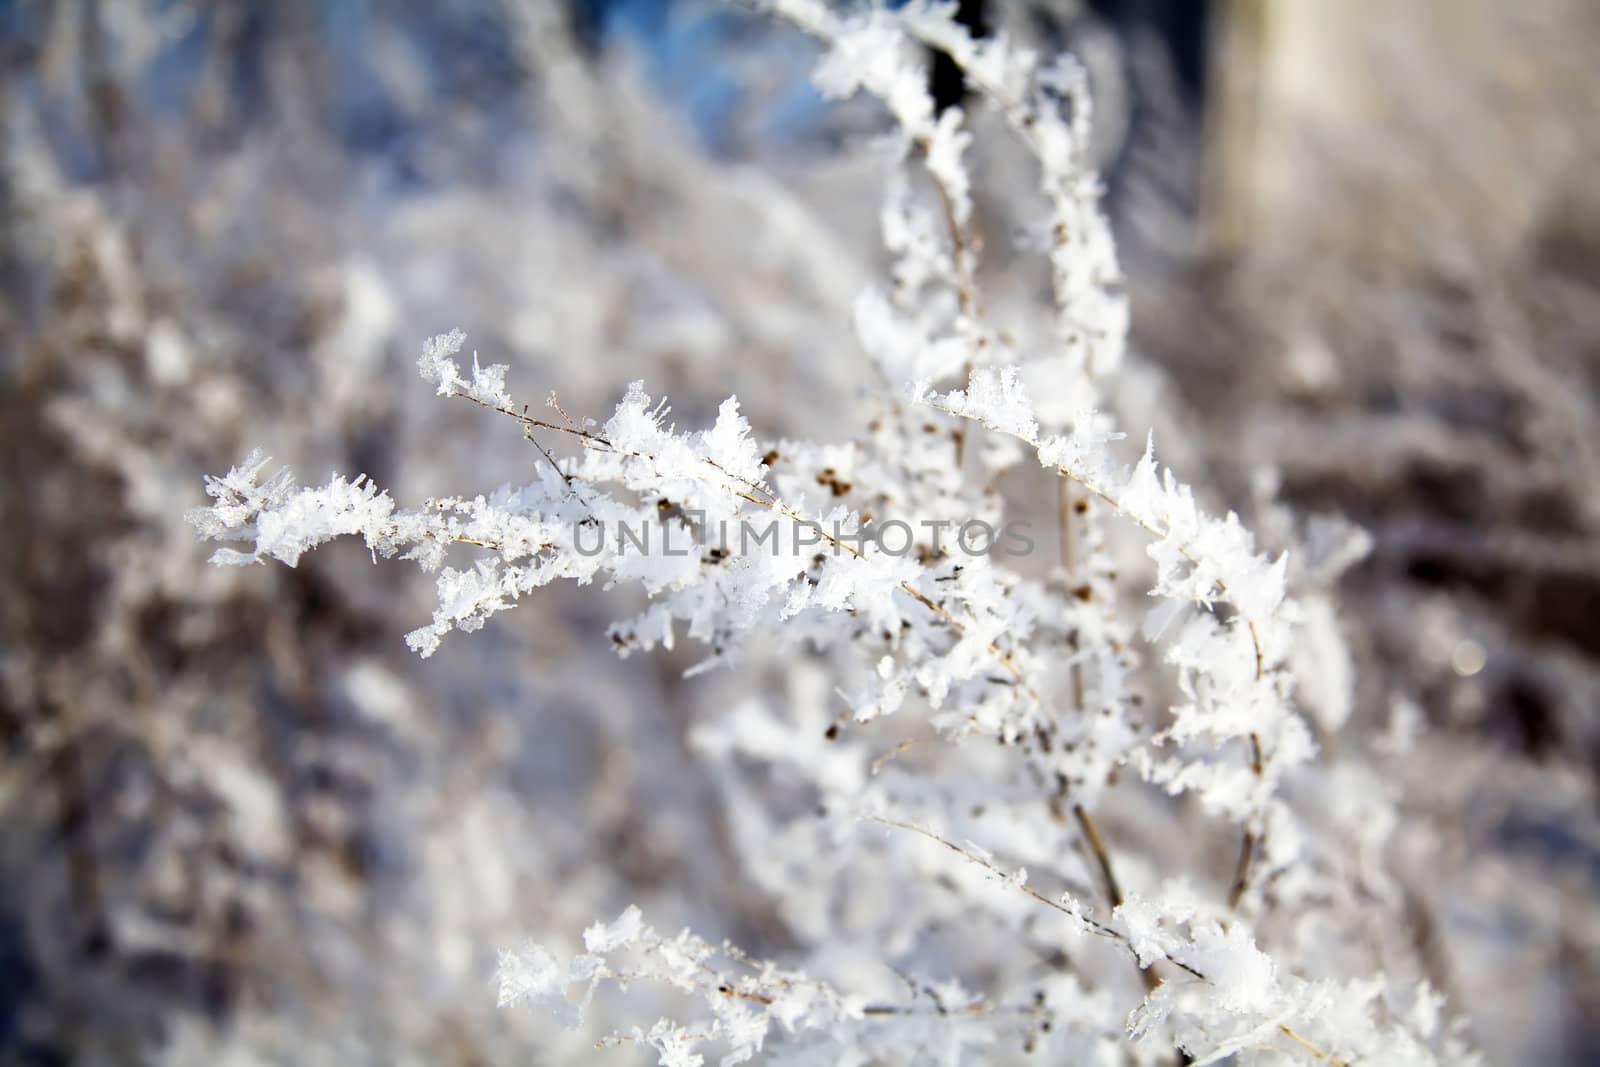 Frozen winter branch in snowflakes